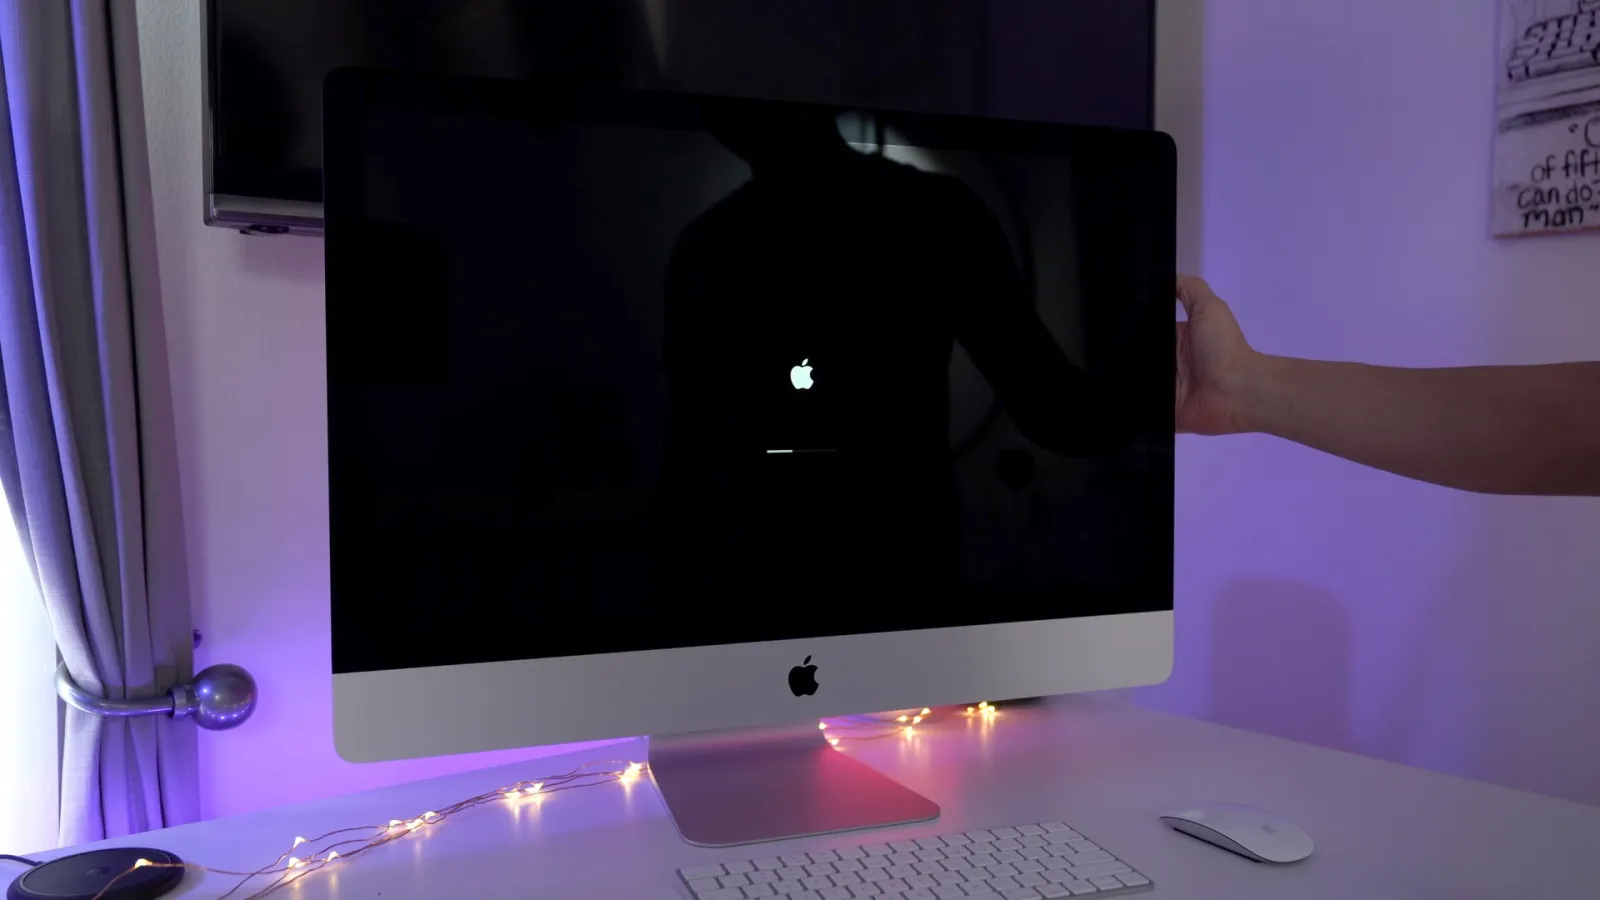 How To Turn On Mac Monitor